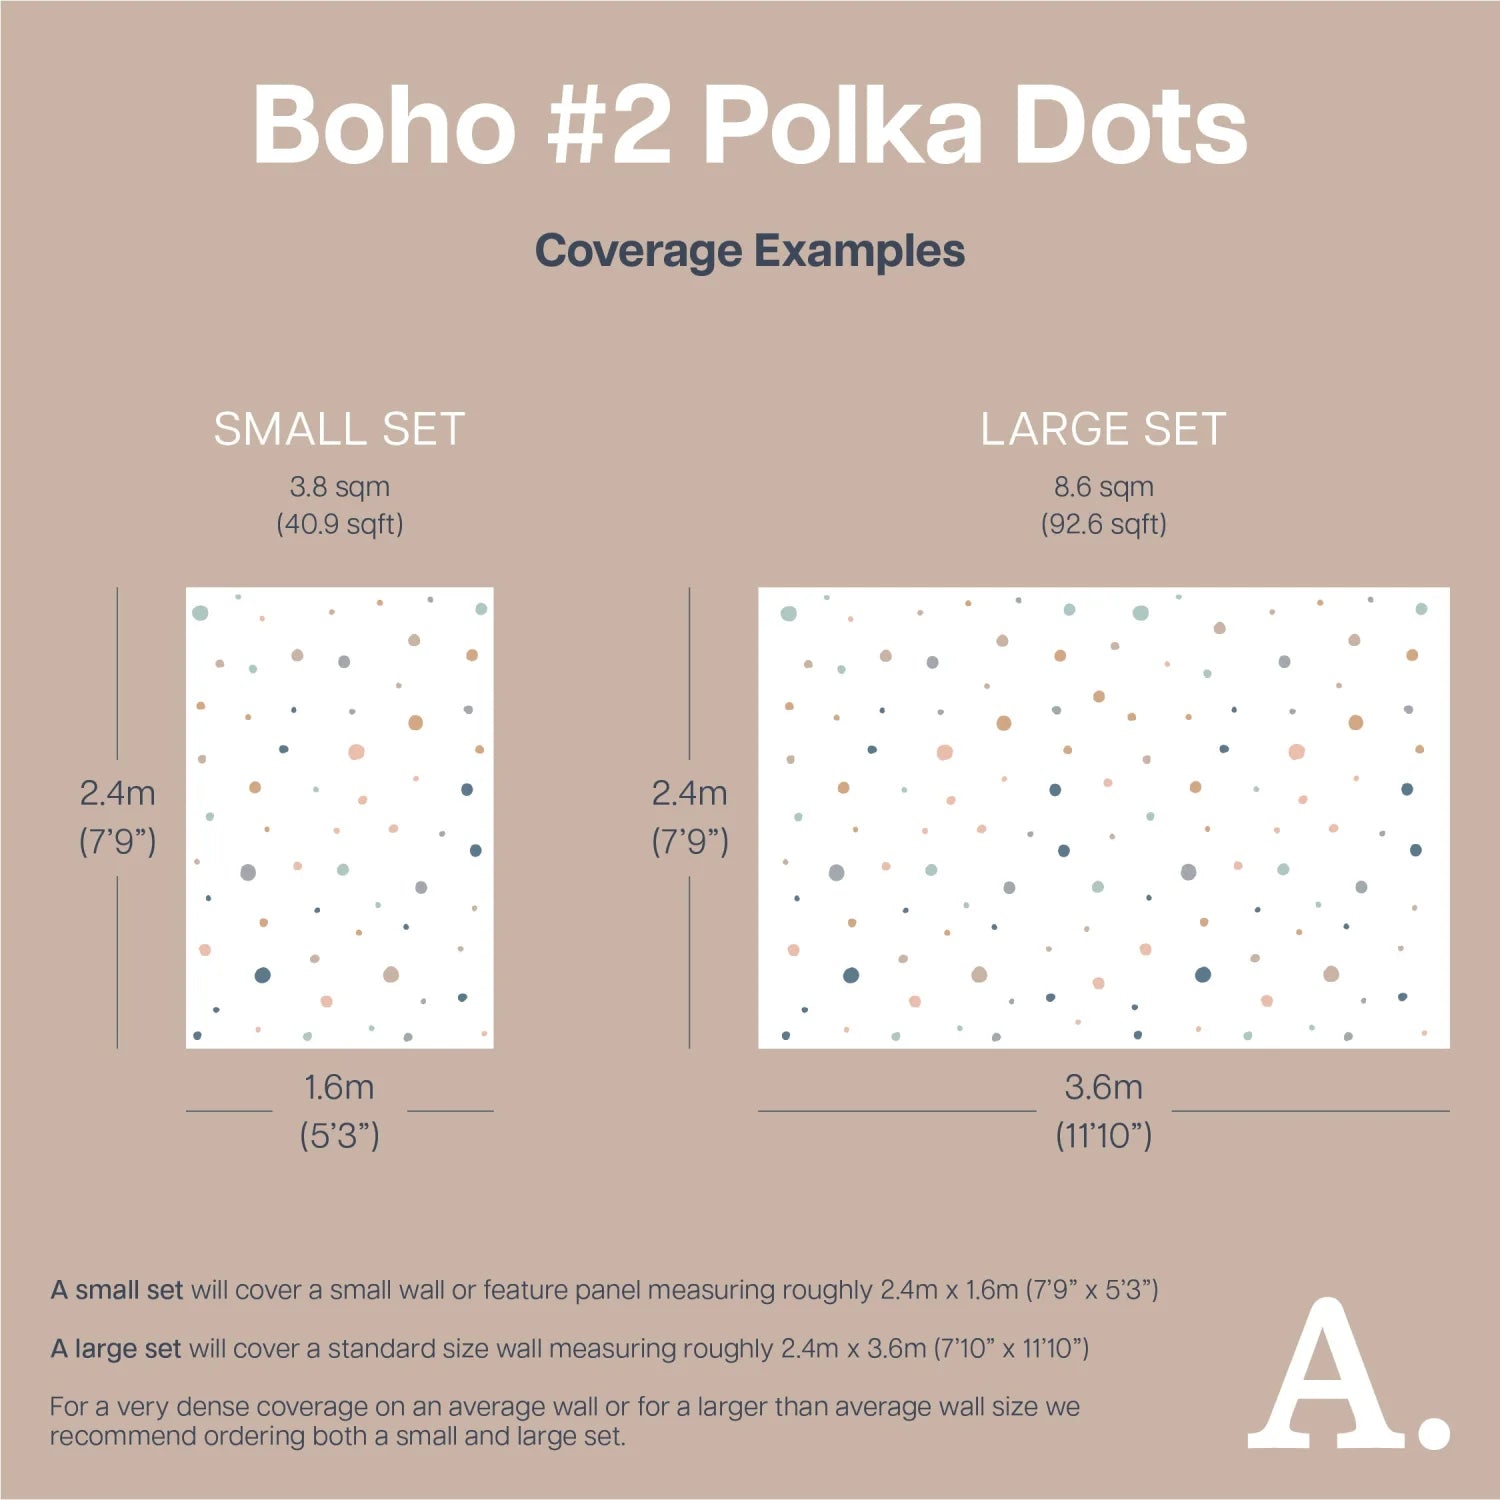 BOHO #2 Polka Dot Wall Decal - Decals - Polka Dots